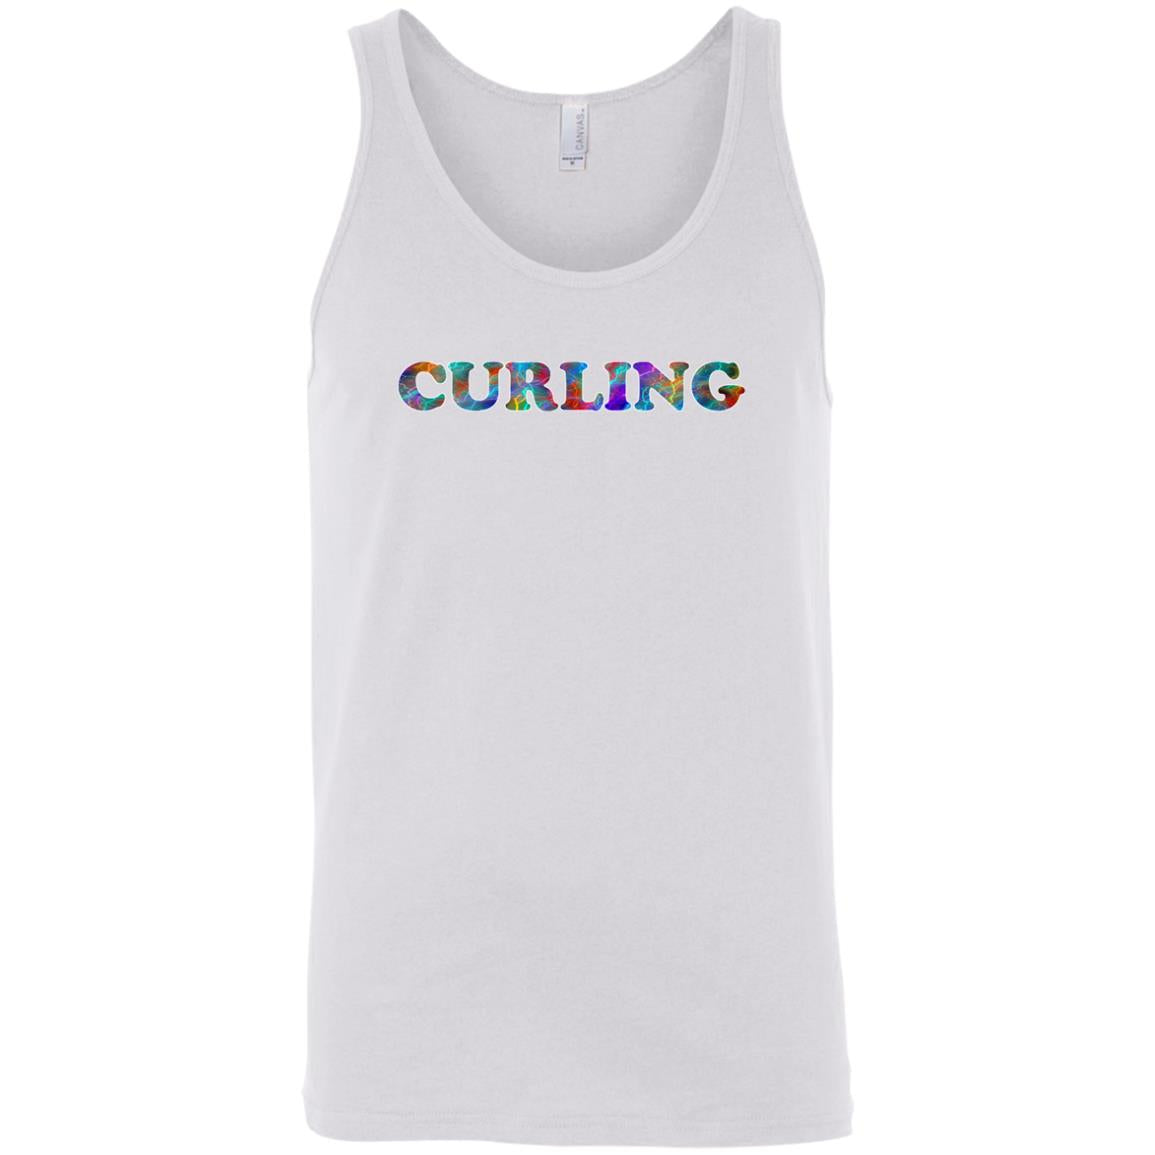 Curling Sleeveless Unisex Tee